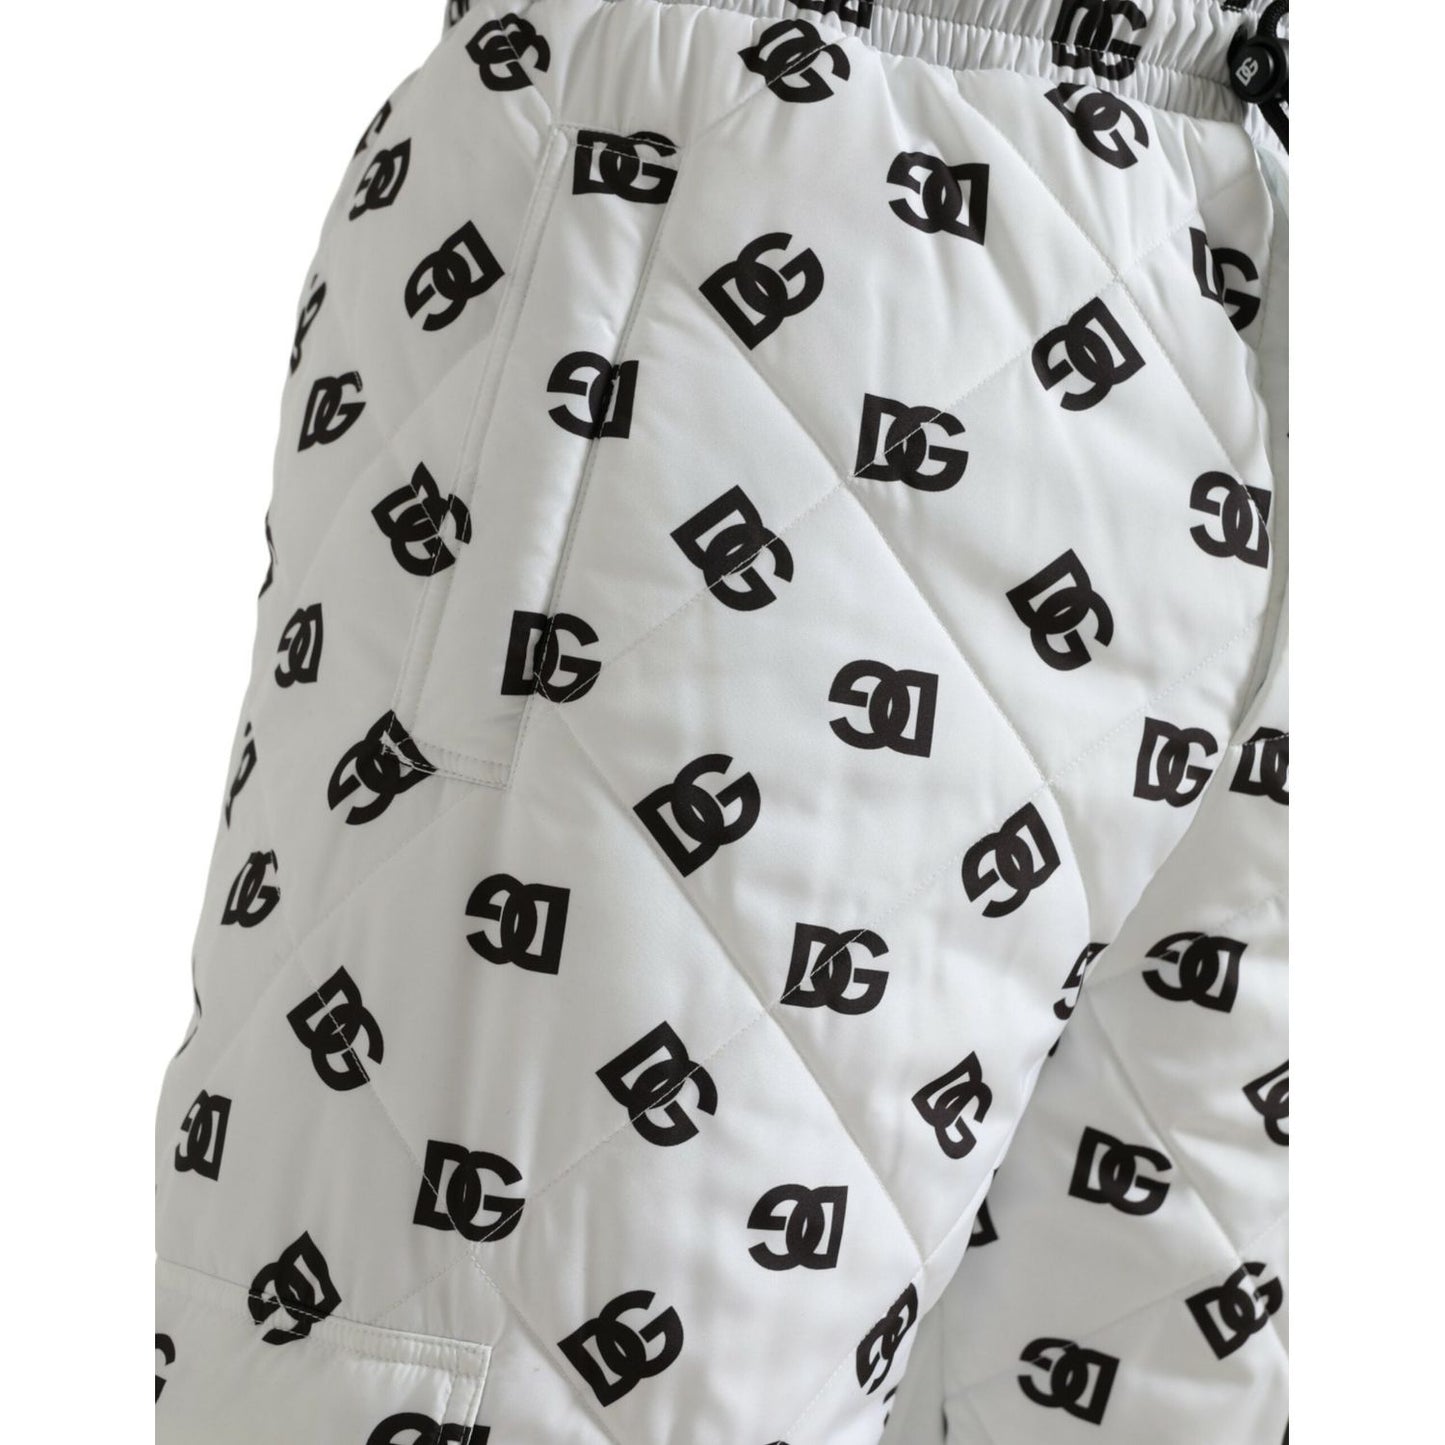 Dolce & Gabbana Chic White Jogger Pants with Iconic DG Print white-logo-dg-print-men-jogger-sweatpants-pants